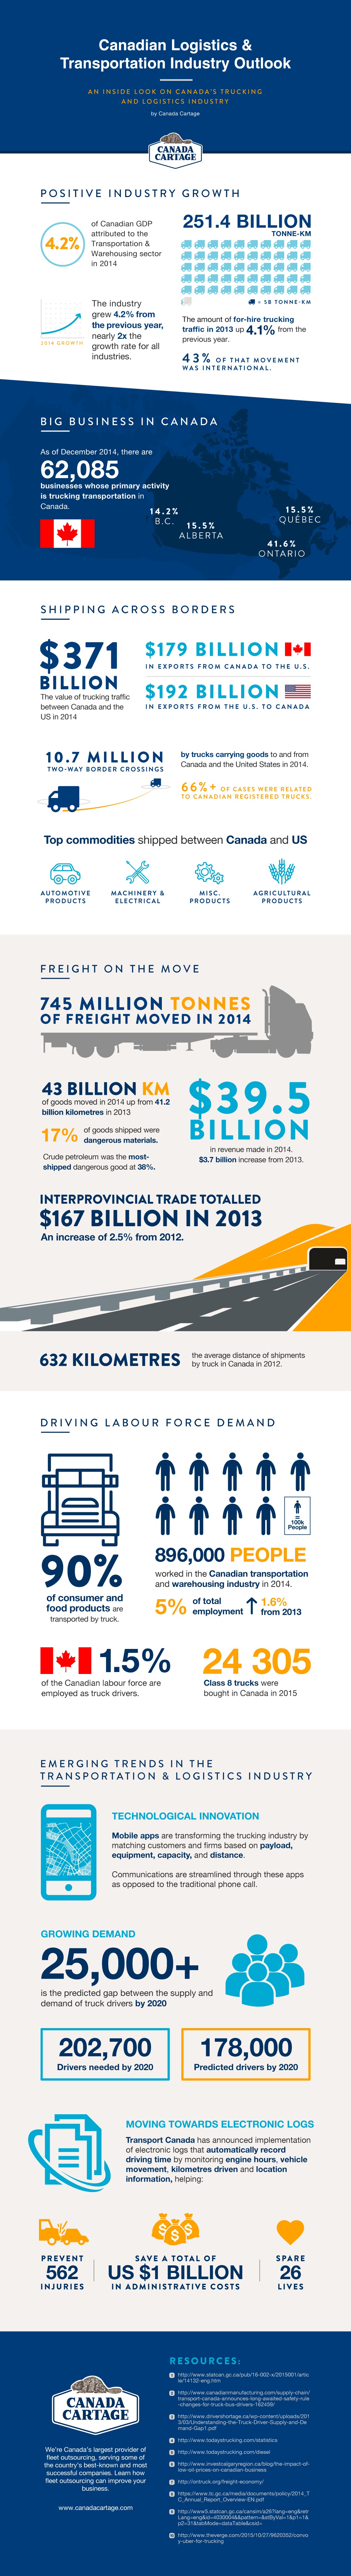 Canadian Logistics & Transportation Industry Outlook